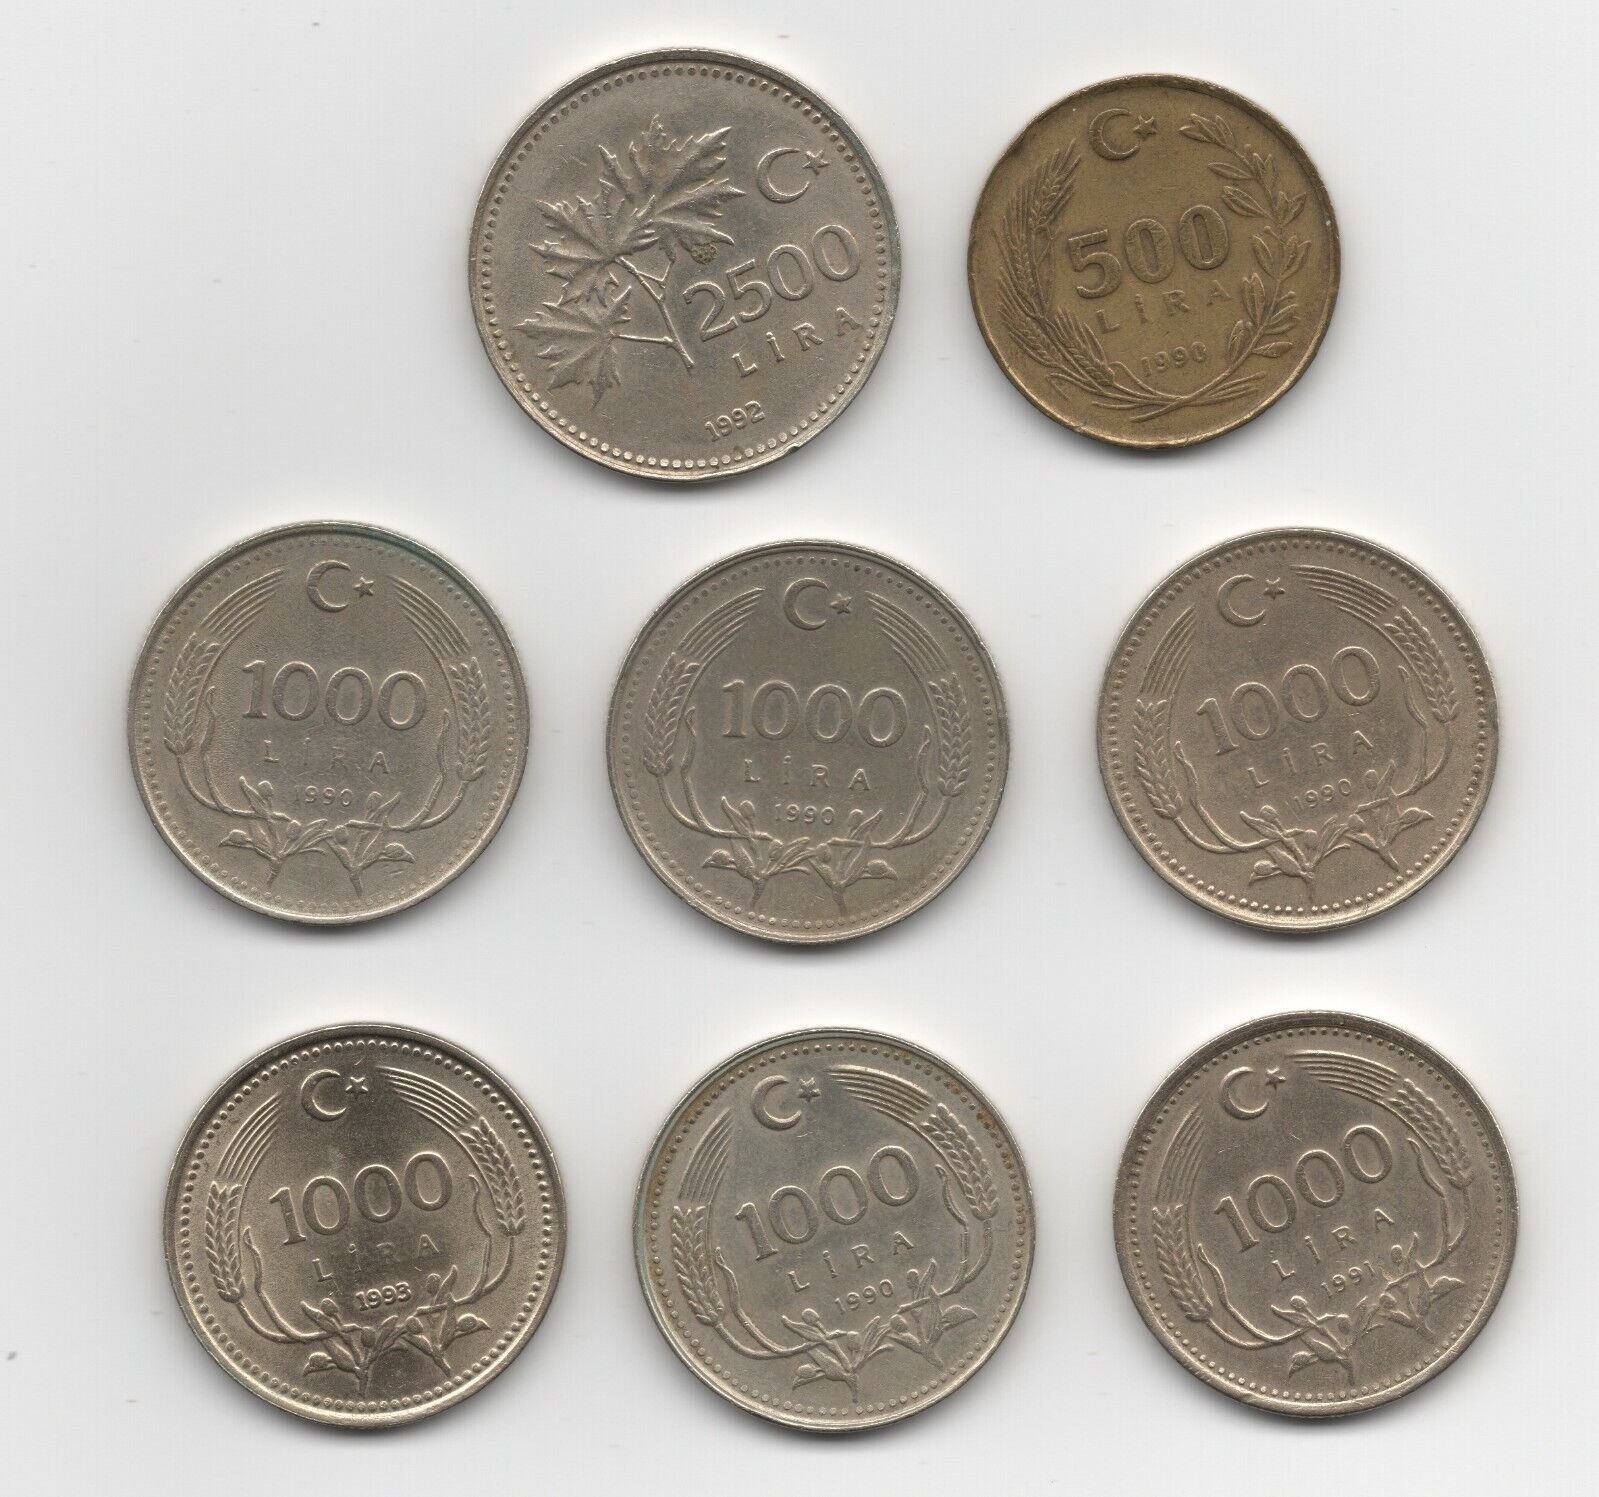 1990s Turkey 8 Coin Lot: 500 Lira, 1000 Lira, 2500 Lira Без бренда - фотография #2